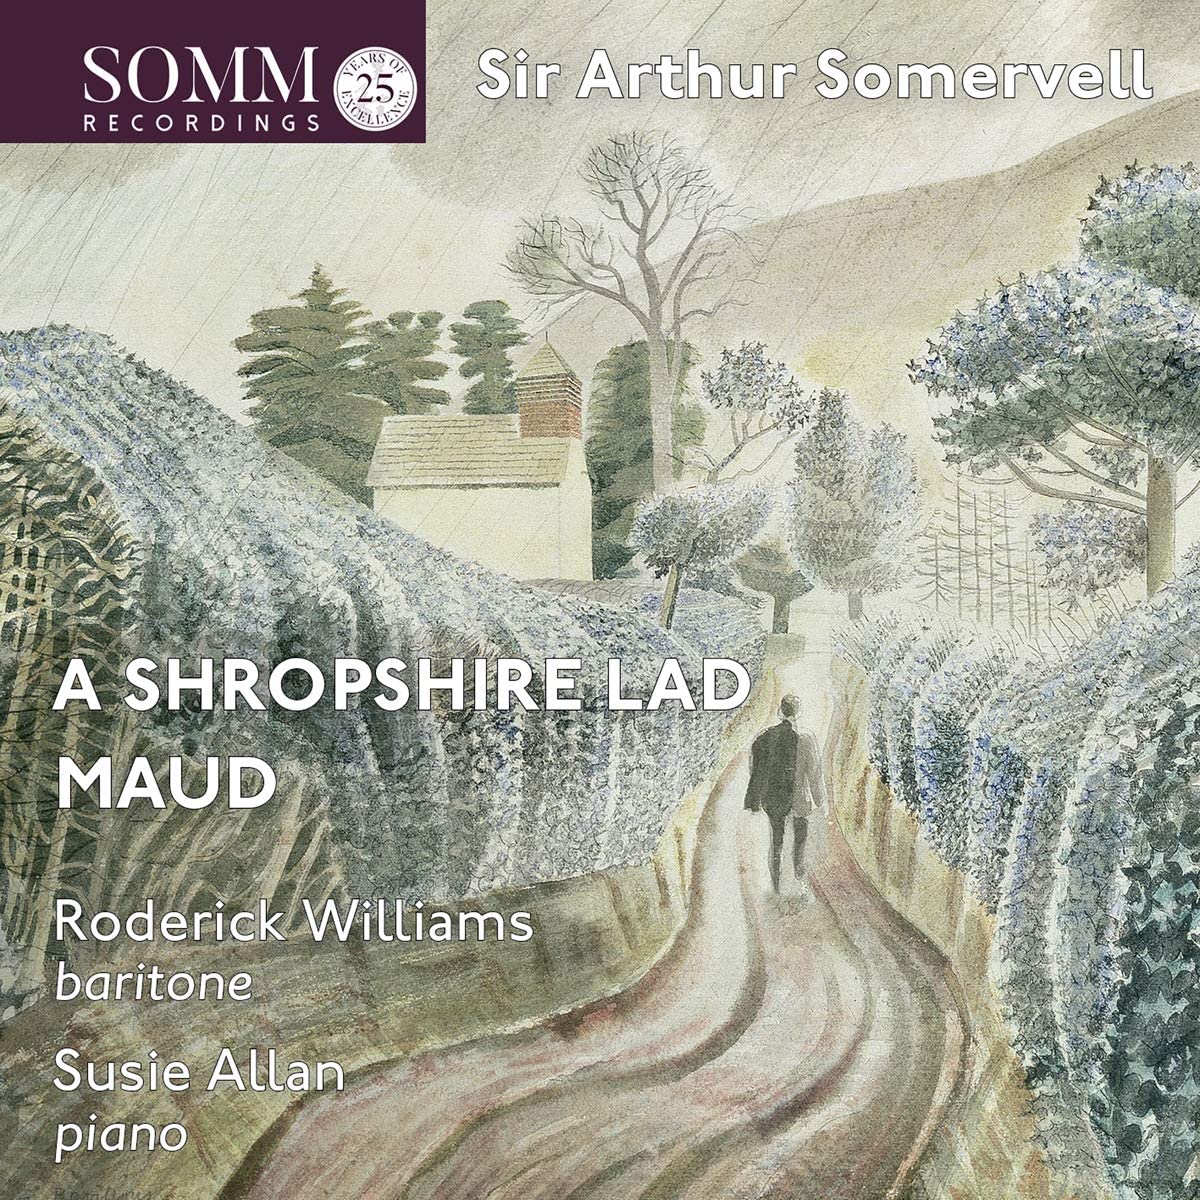 SOMMCD0615. SOMERVELL A Shropshire Lad. Maud (Roderick Williams)